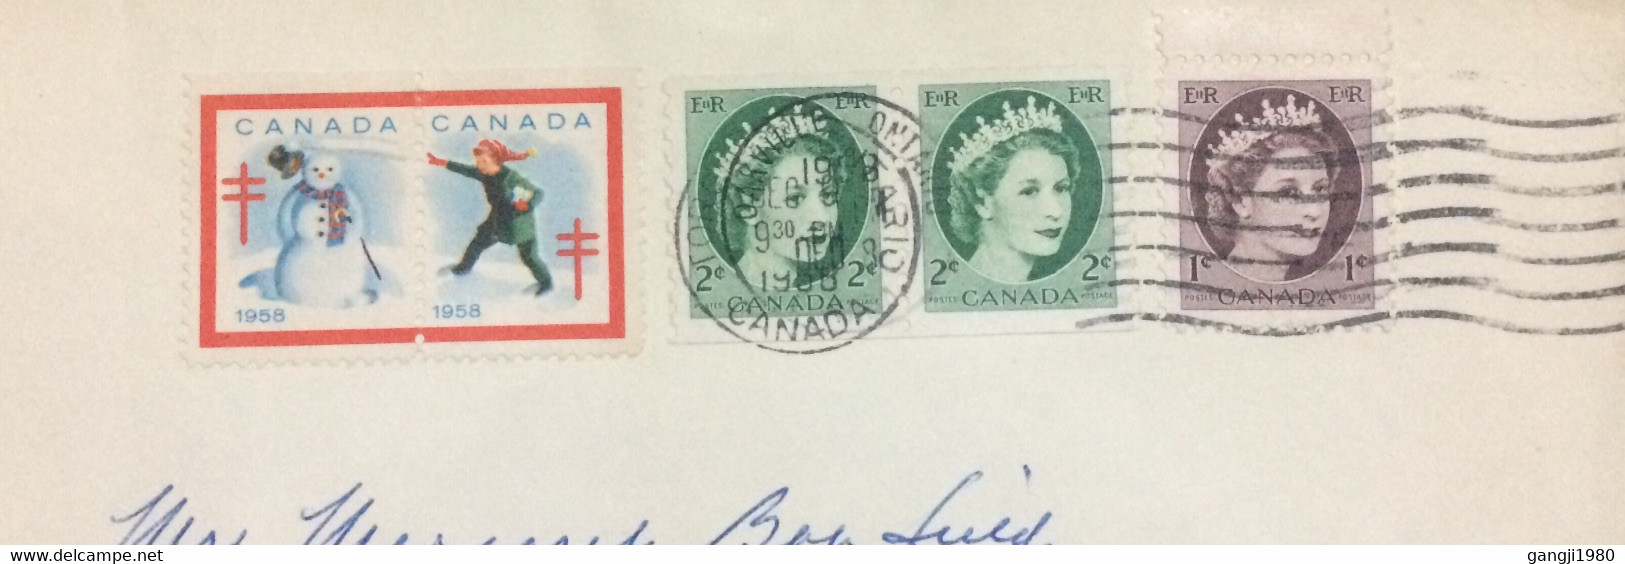 CANADA 1958, COVER USED, VIGNETTE LABEL, CHRISTMAS T.B, SNOWMAN, QUEEN STAMP, OAKVILLE & TORONTO WAVY CITY CANCEL - Briefe U. Dokumente